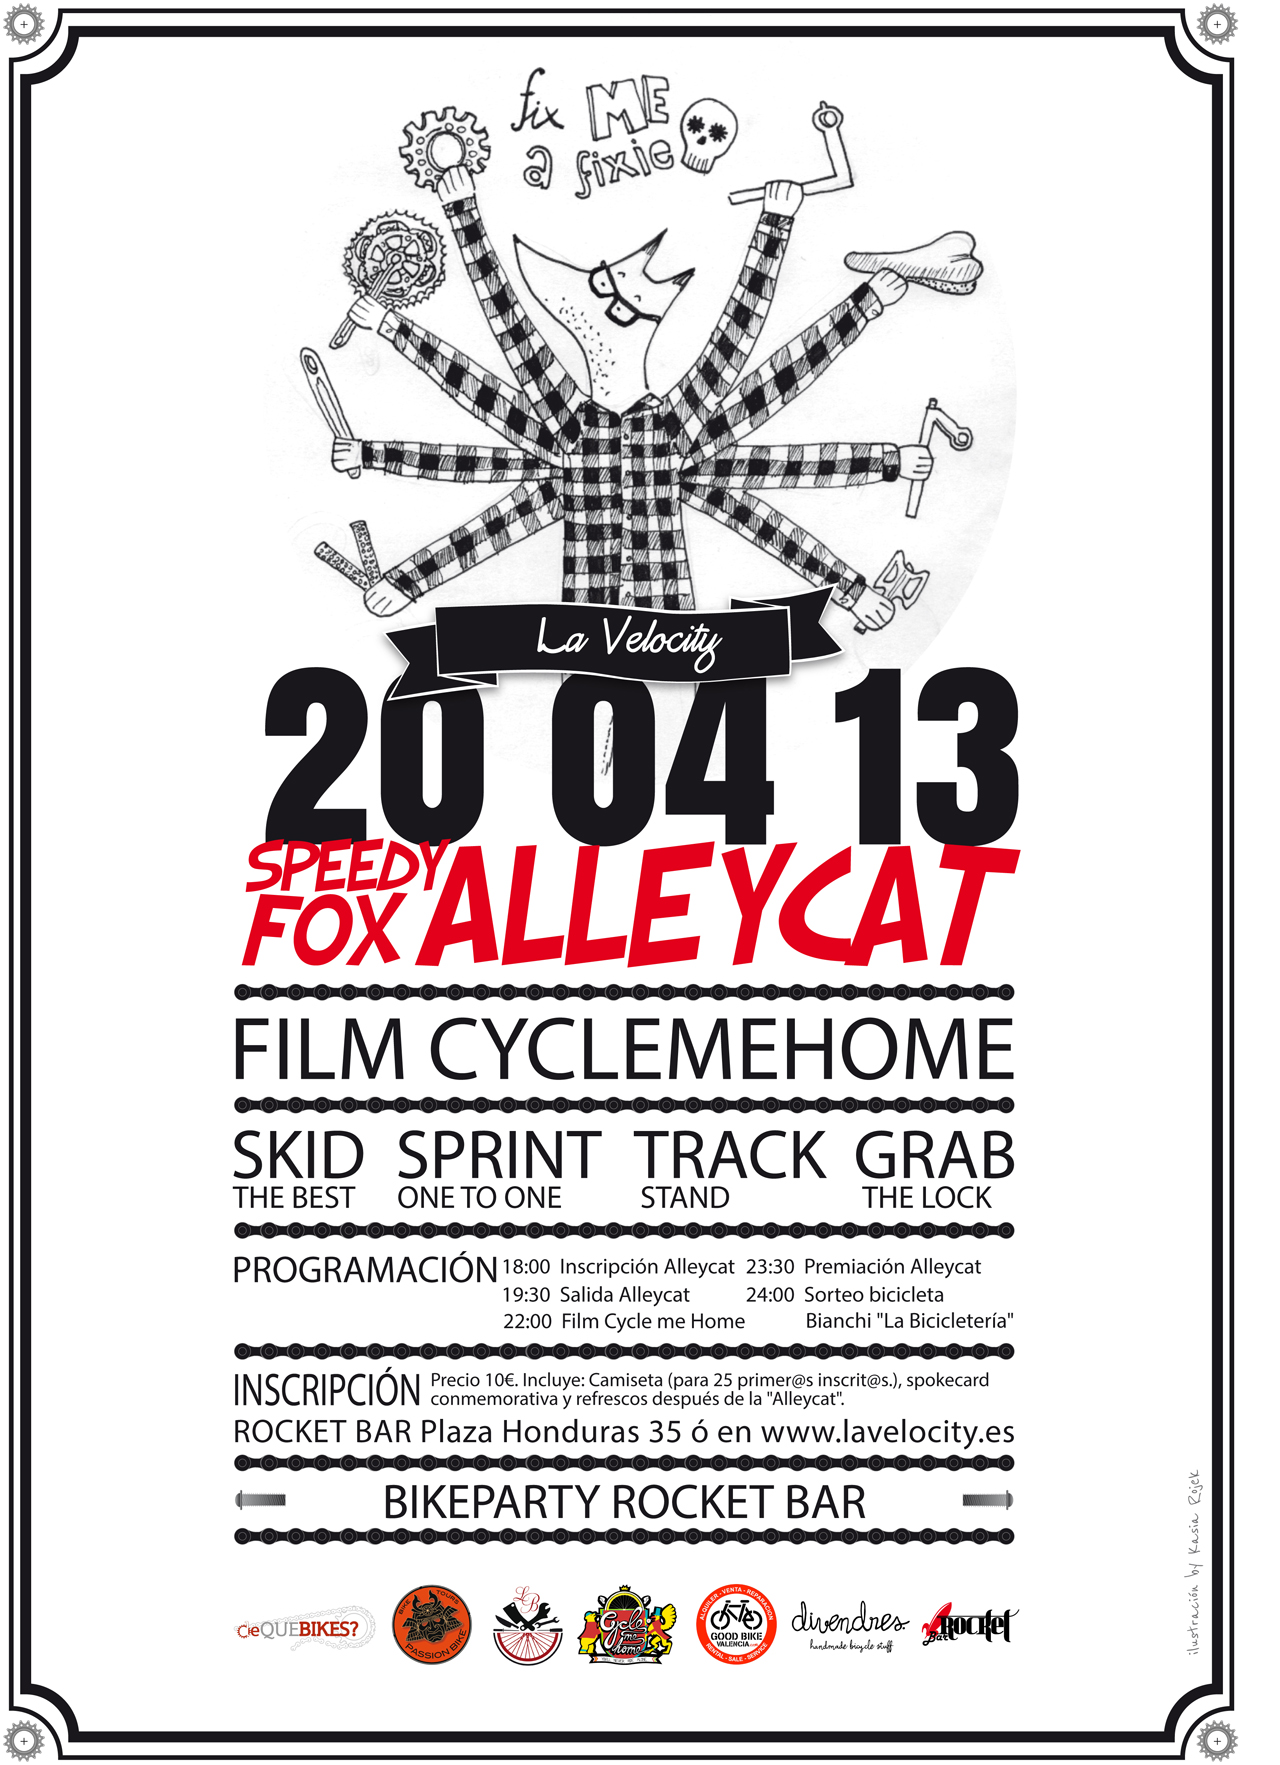 Speedy Fox "Alleycat"